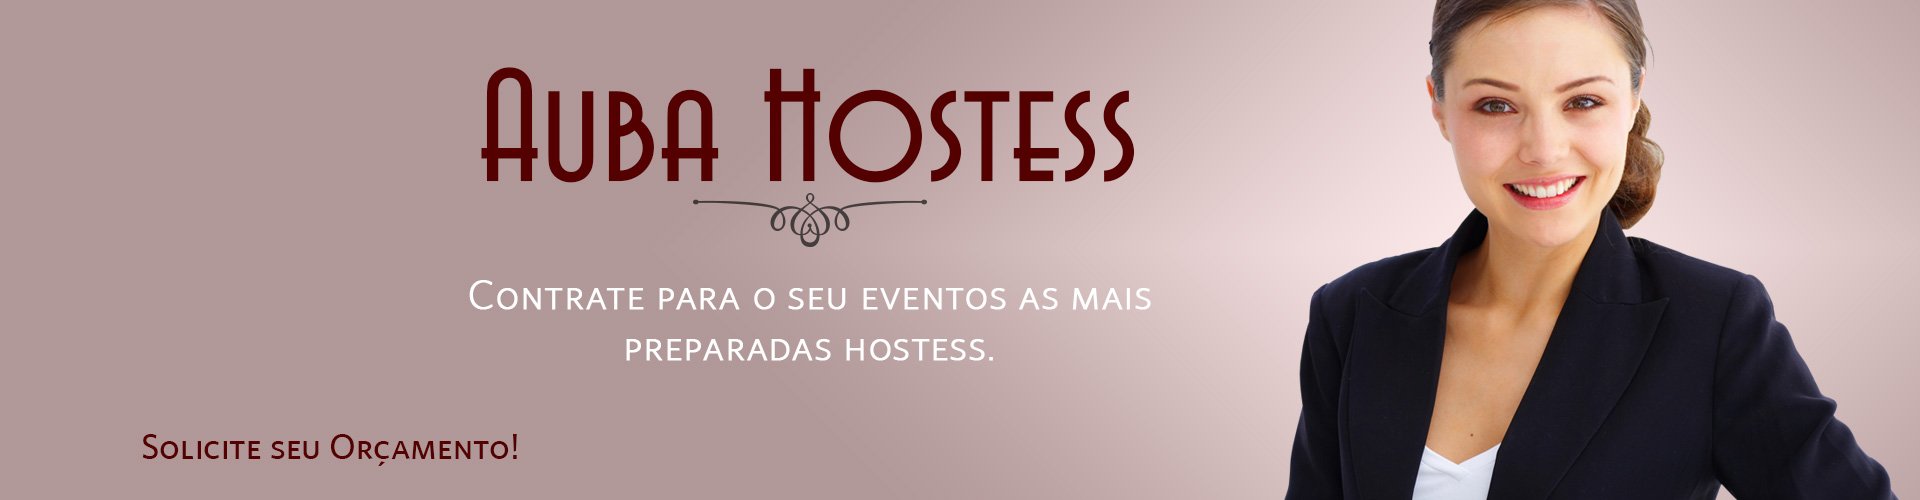 grupo-auba-hostess-banner